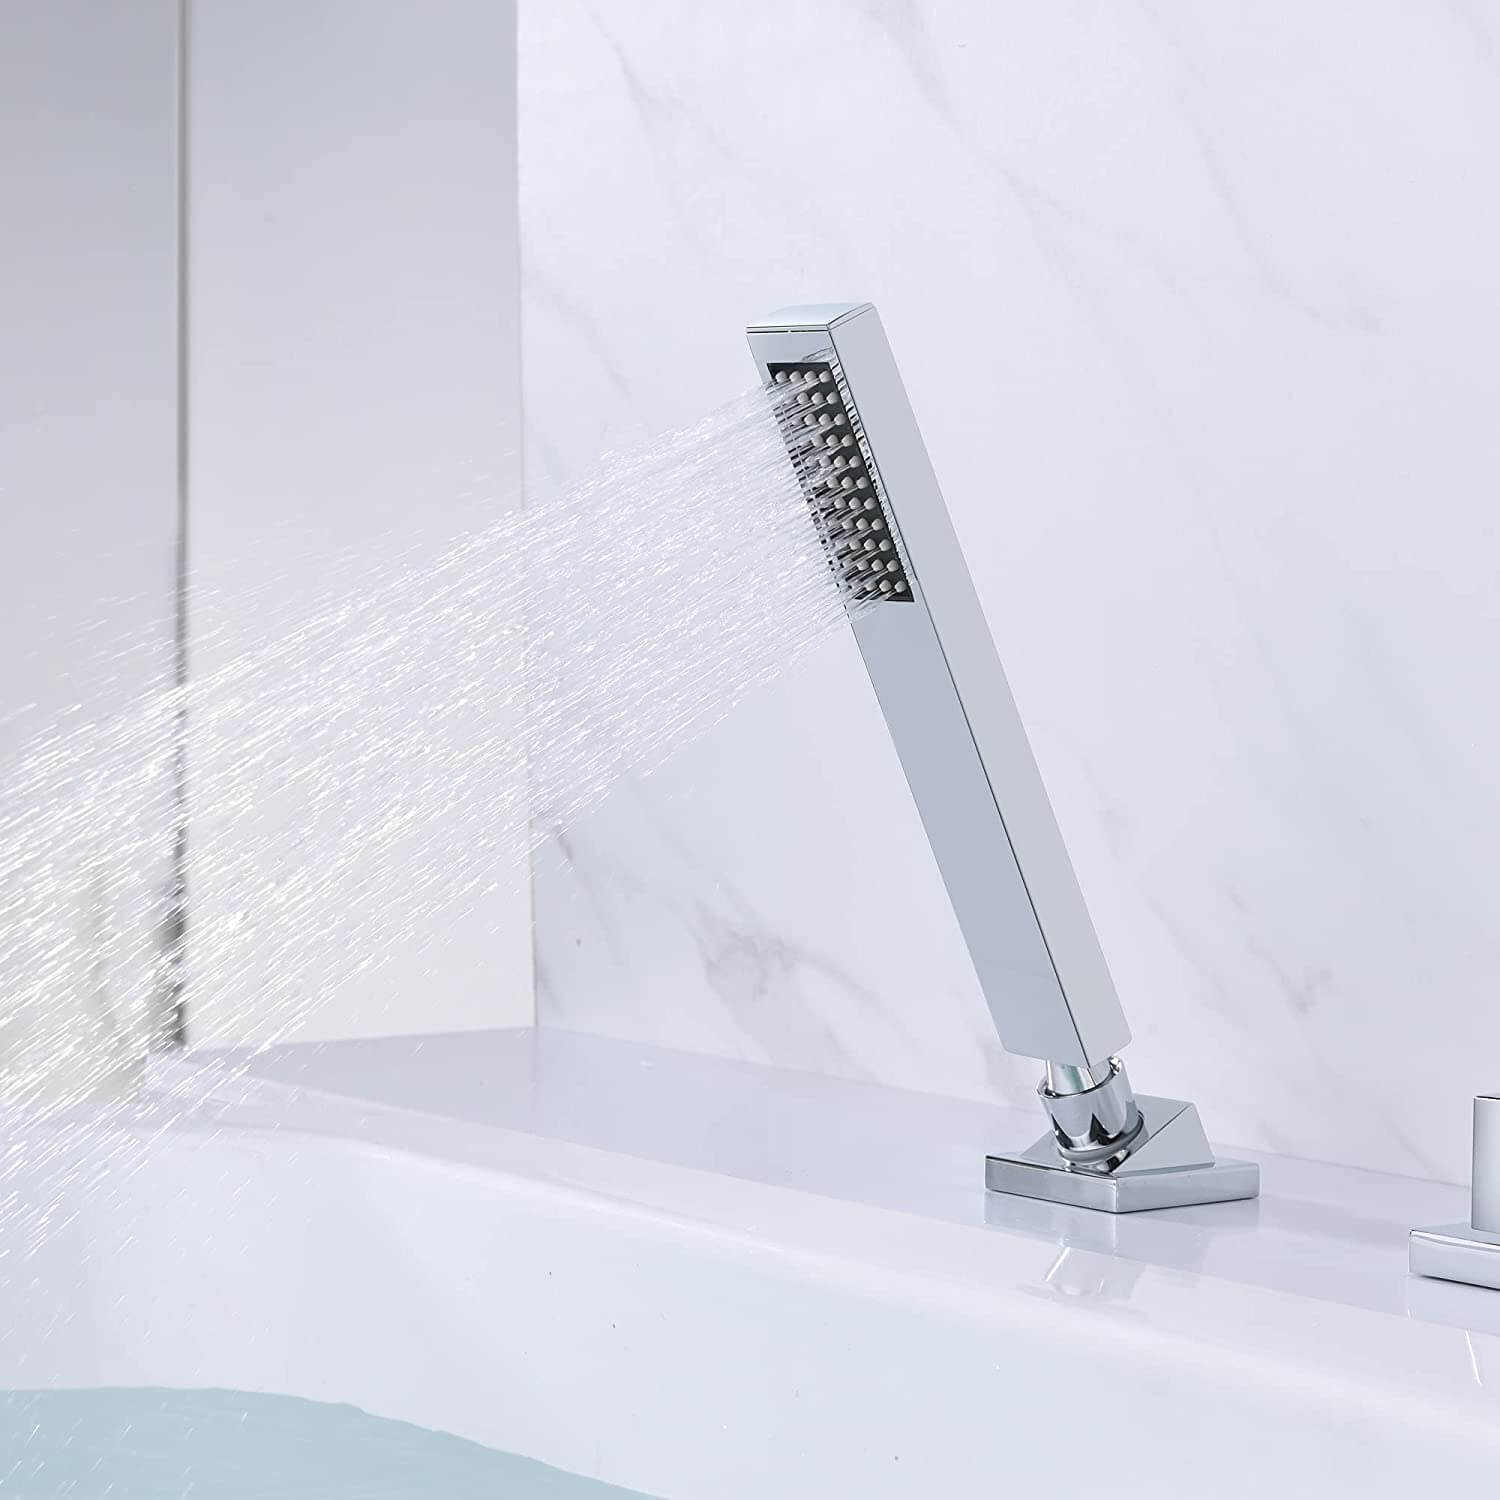 wowow chrome 5 hole waterfall roman tub faucet